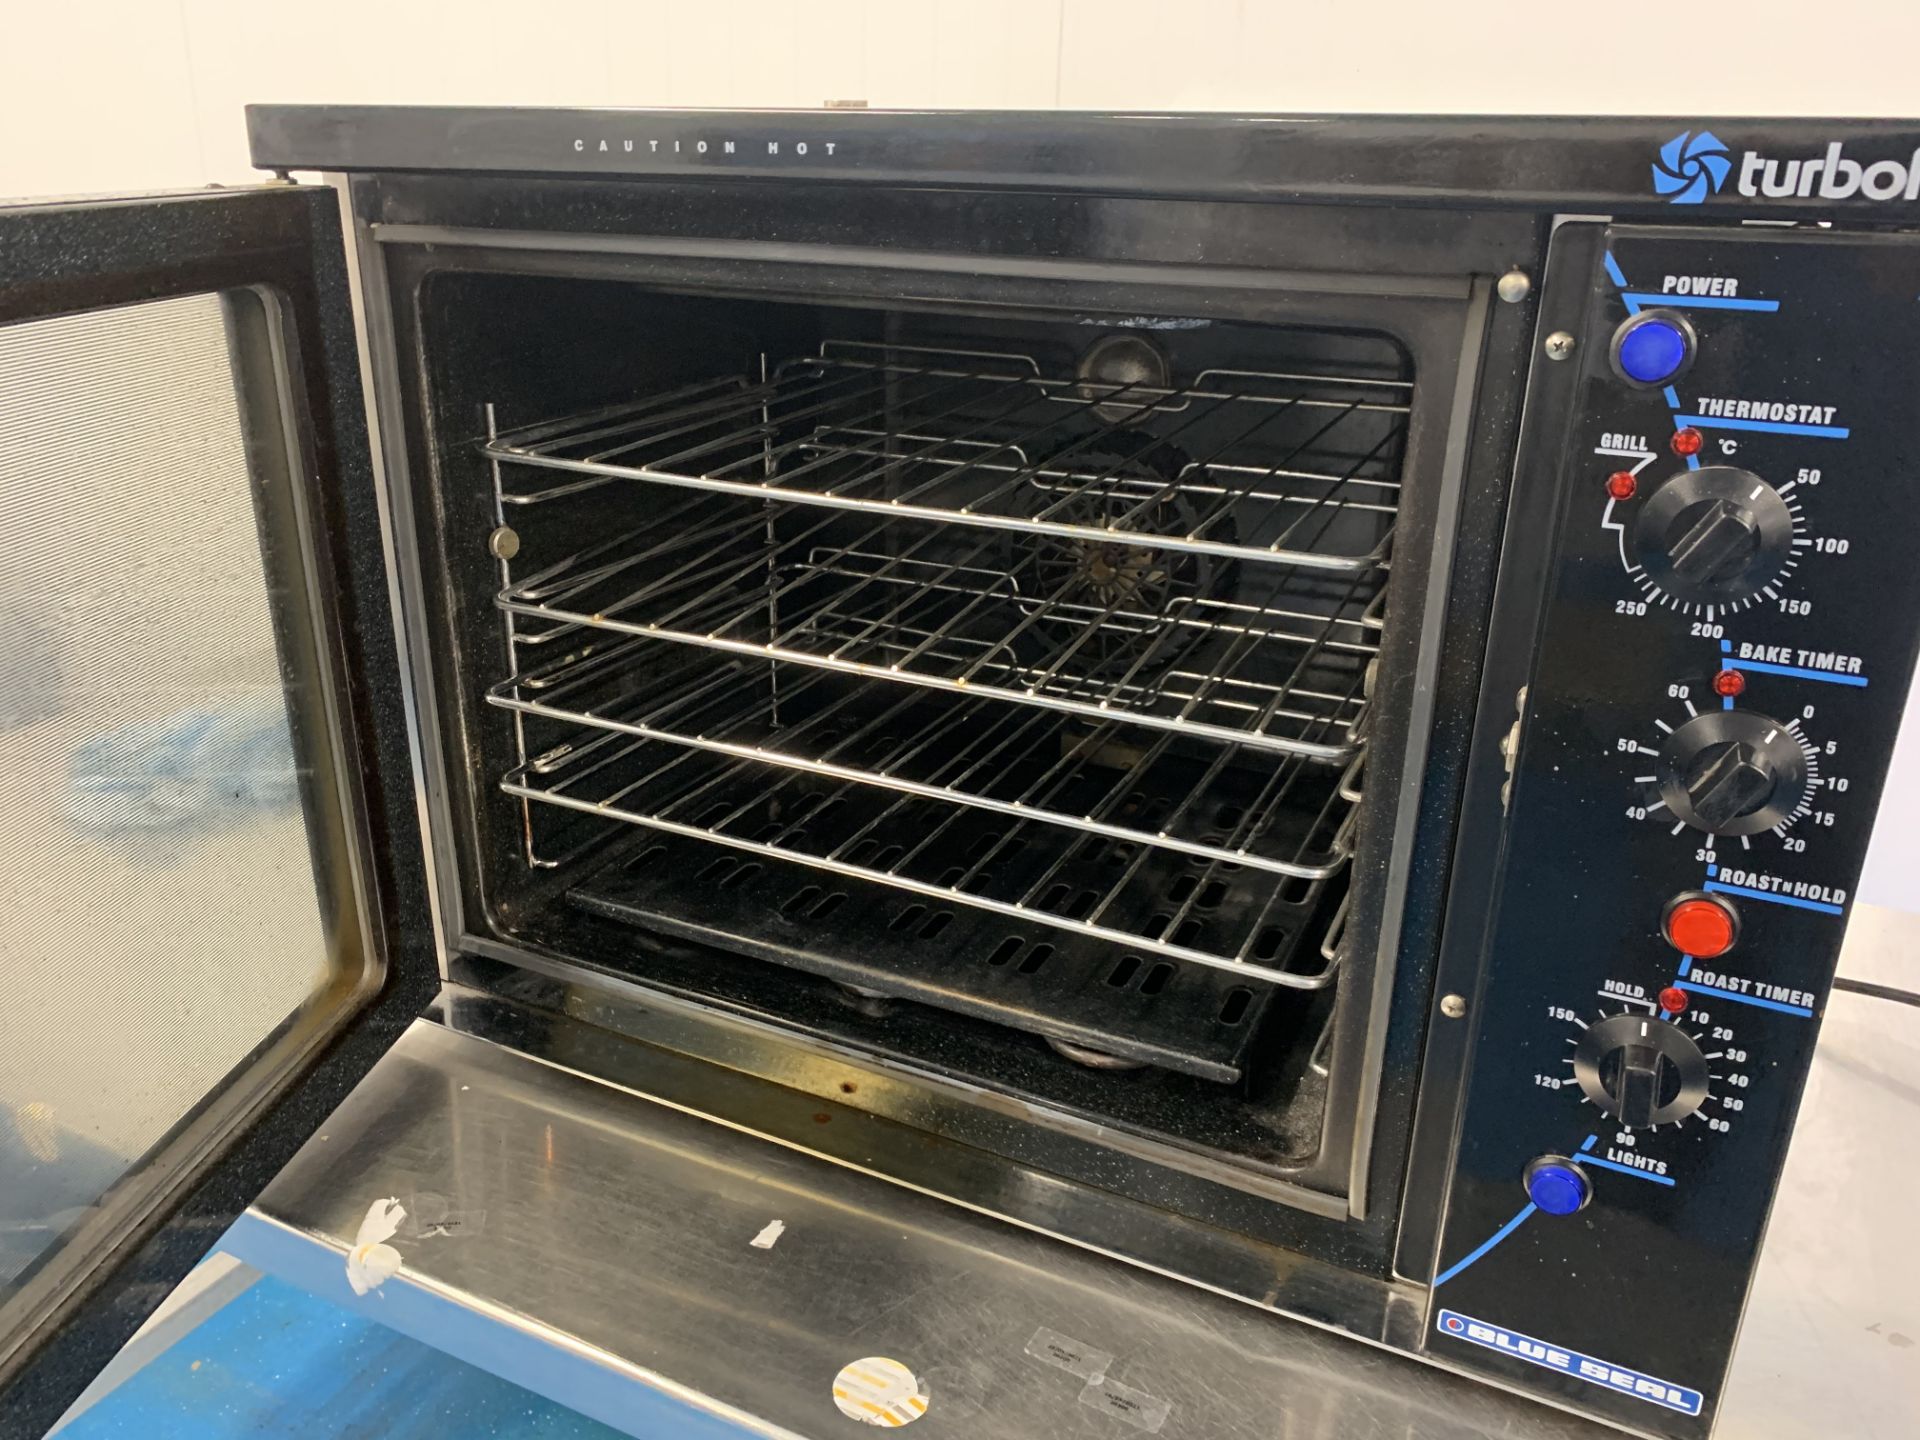 Blue Seal Model E311 turbo fan oven - Image 3 of 3